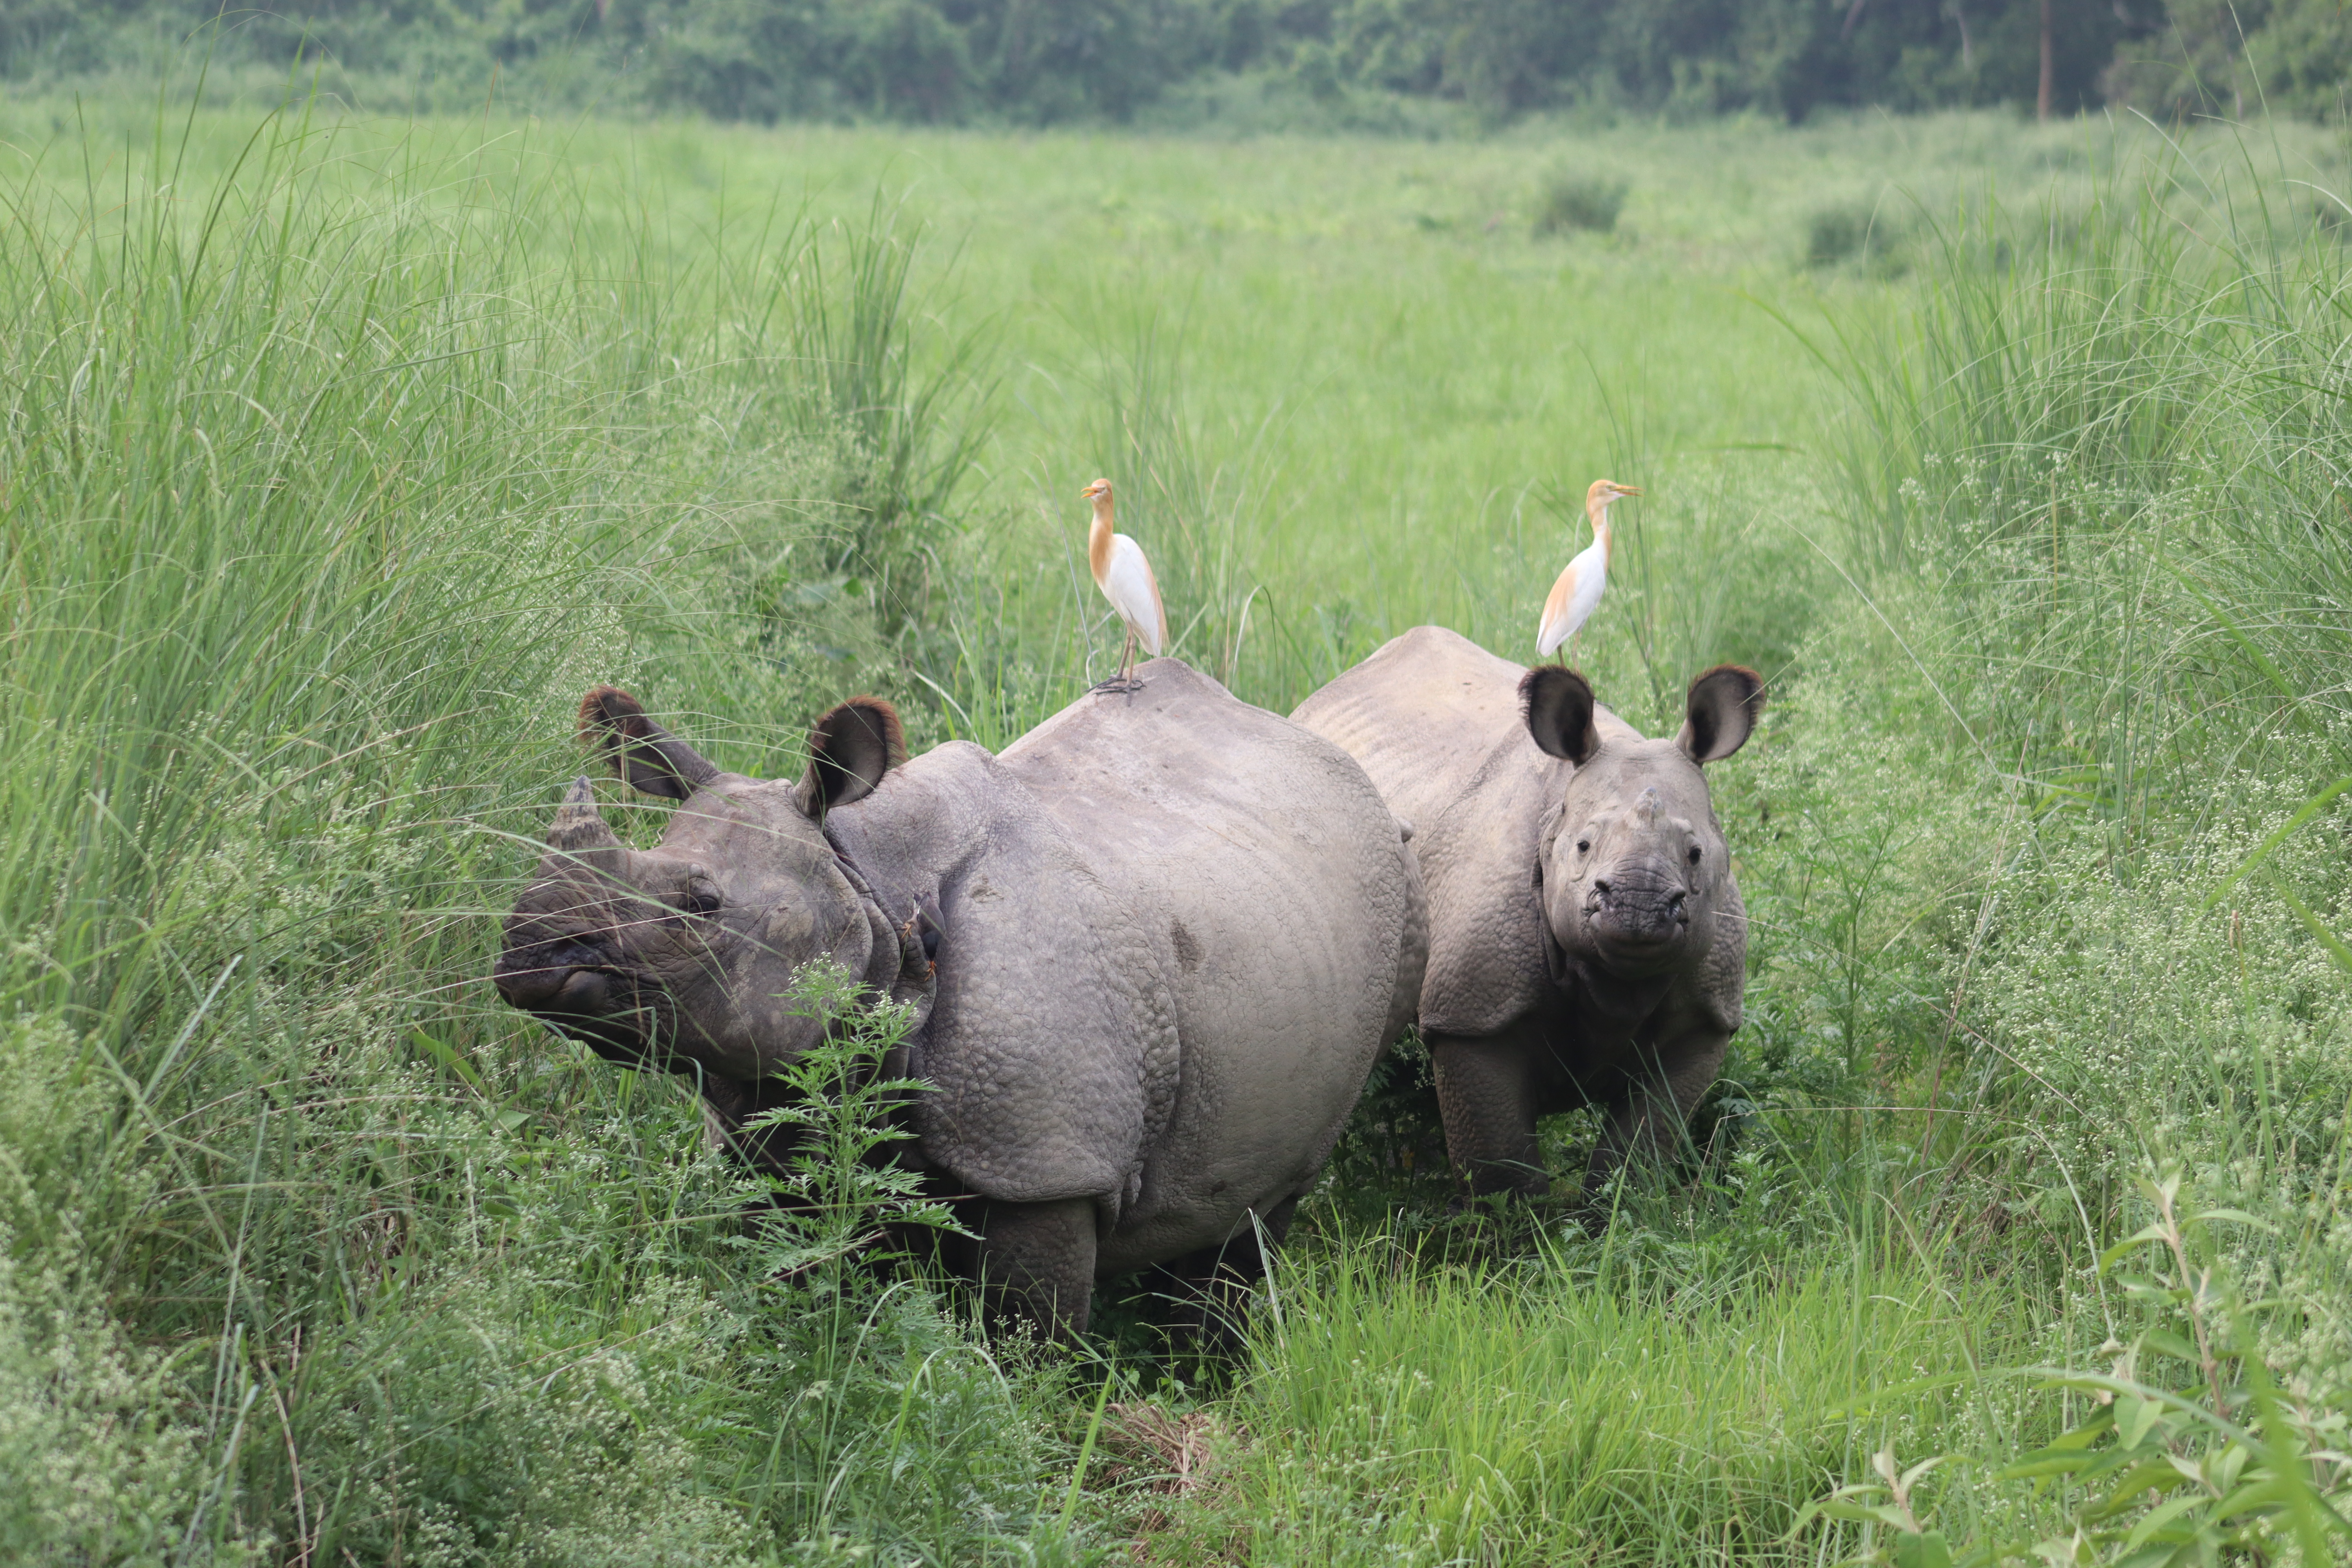 Greater one horned rhino, mother and calf in Chitwan National Park, Nepal © Babu Ram Lamichhane 2 (1).JPG